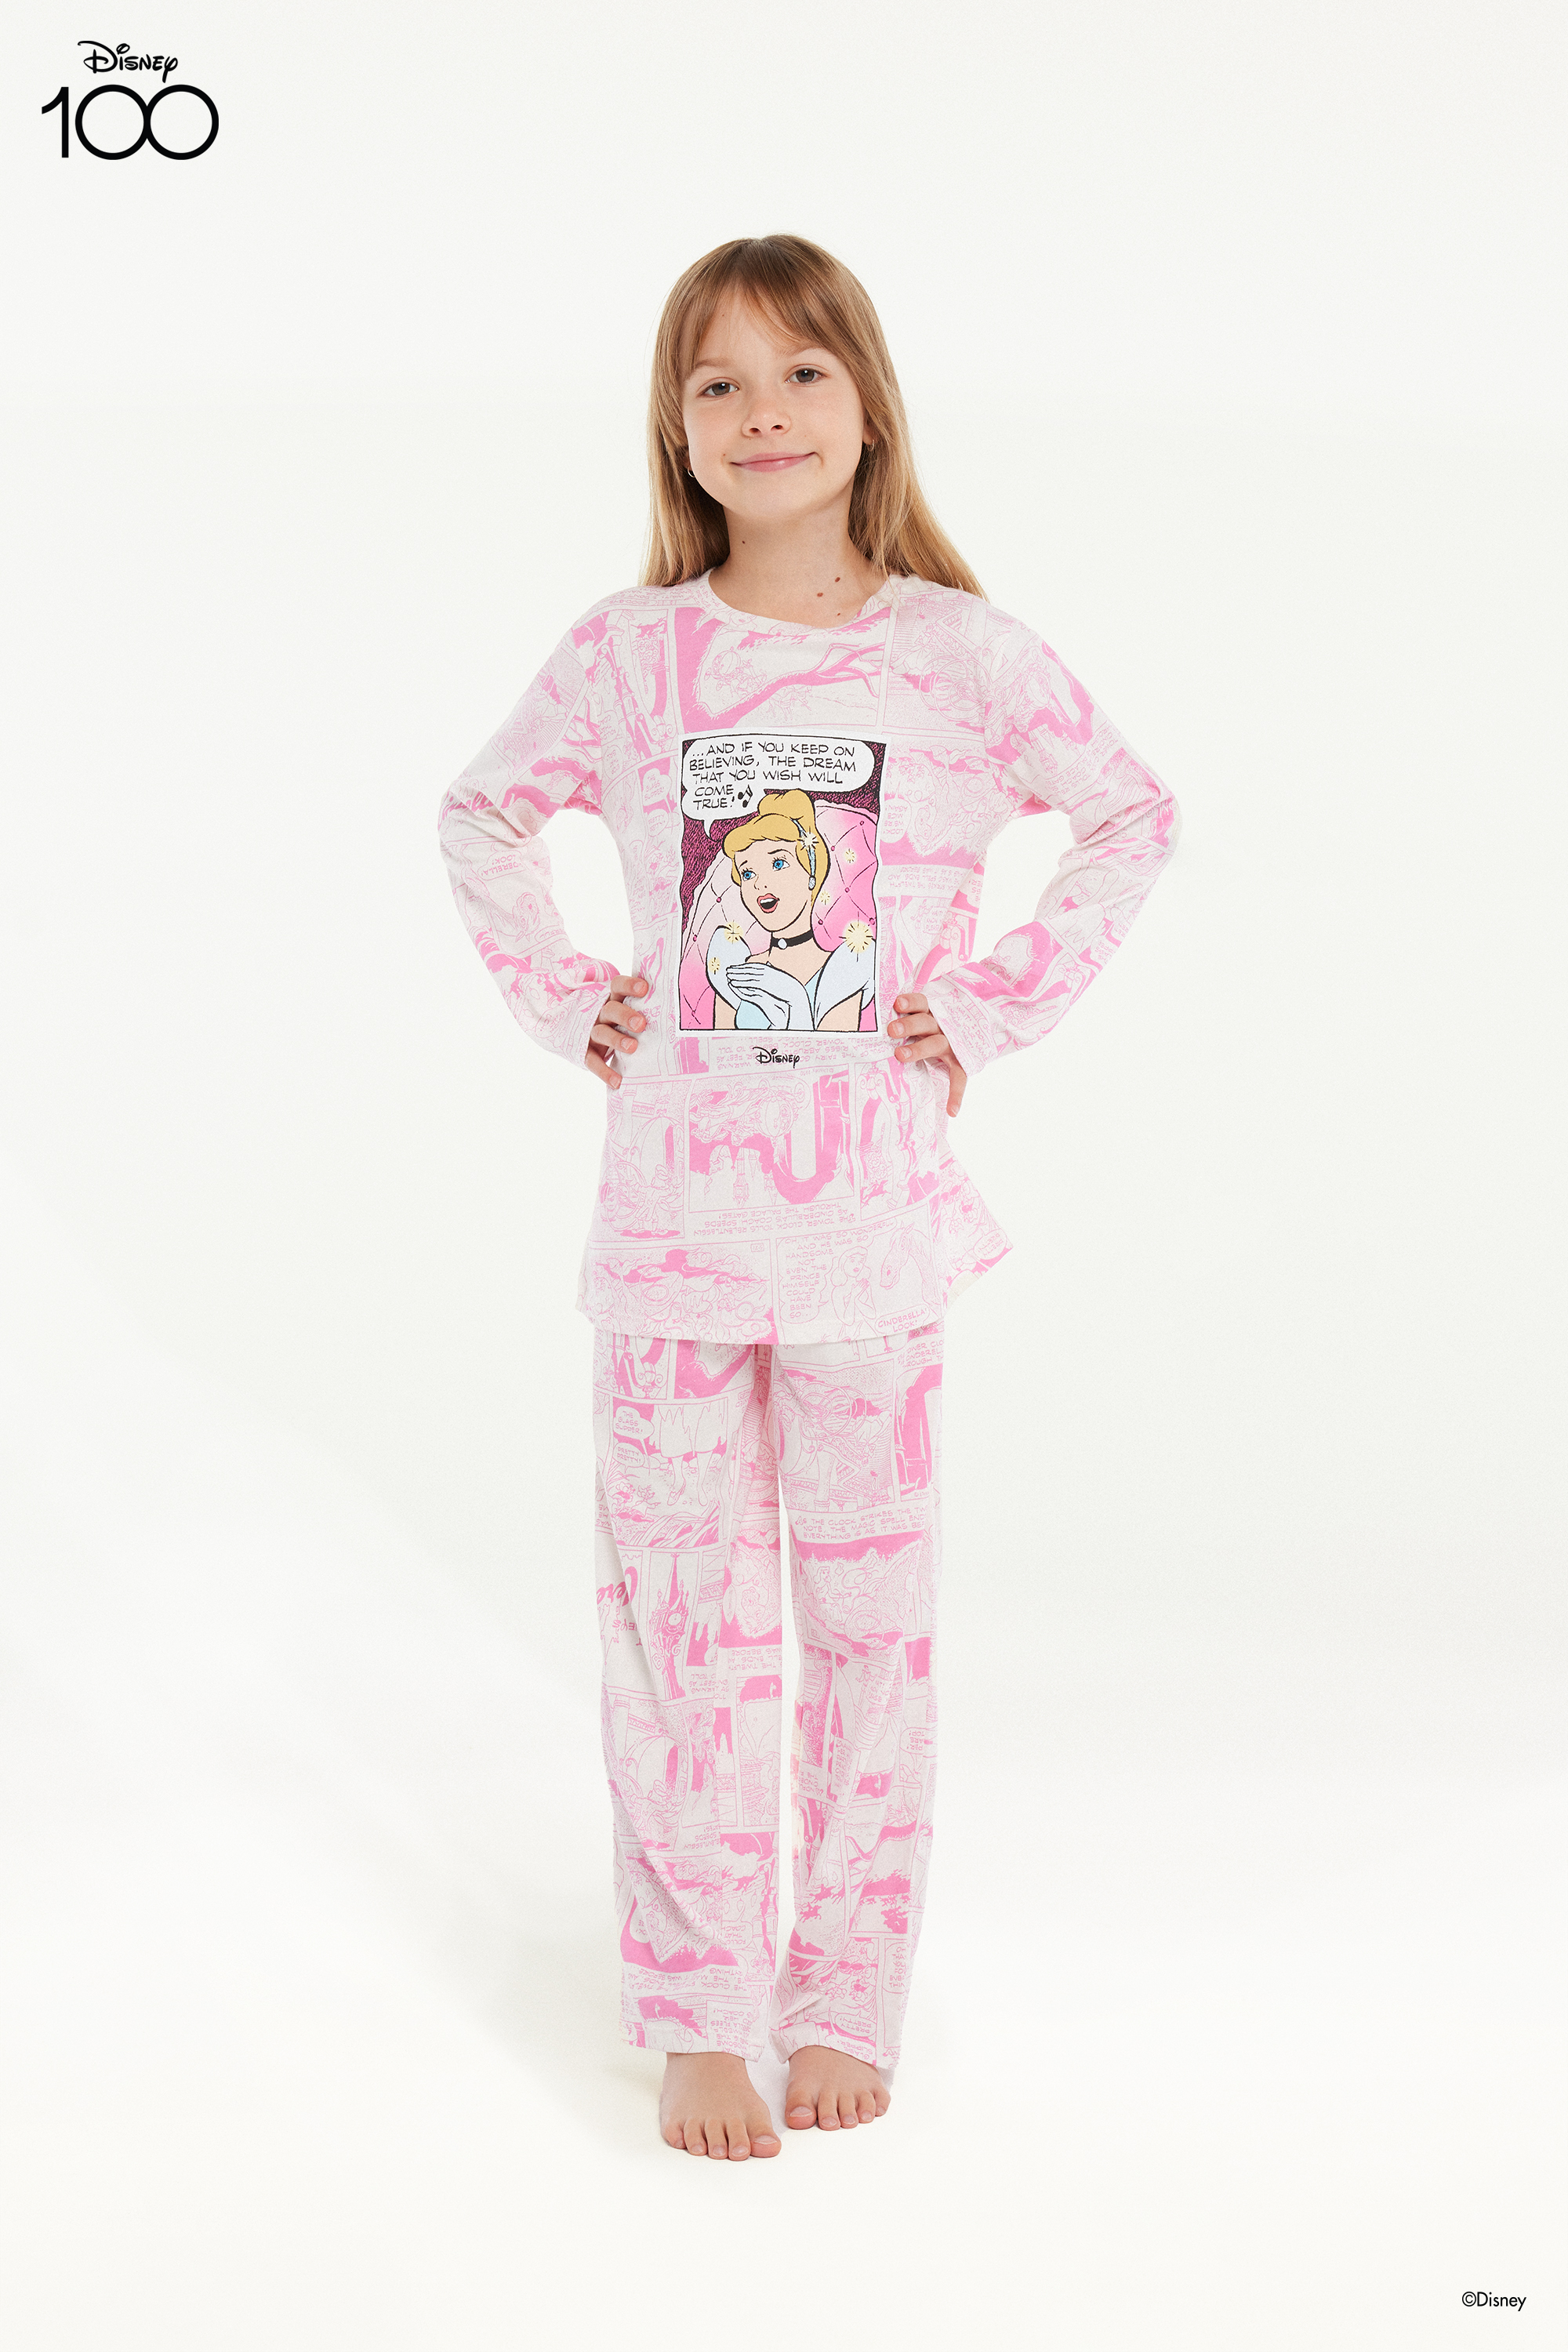 Girls’ Long Cotton Pyjamas with Disney 100 Print